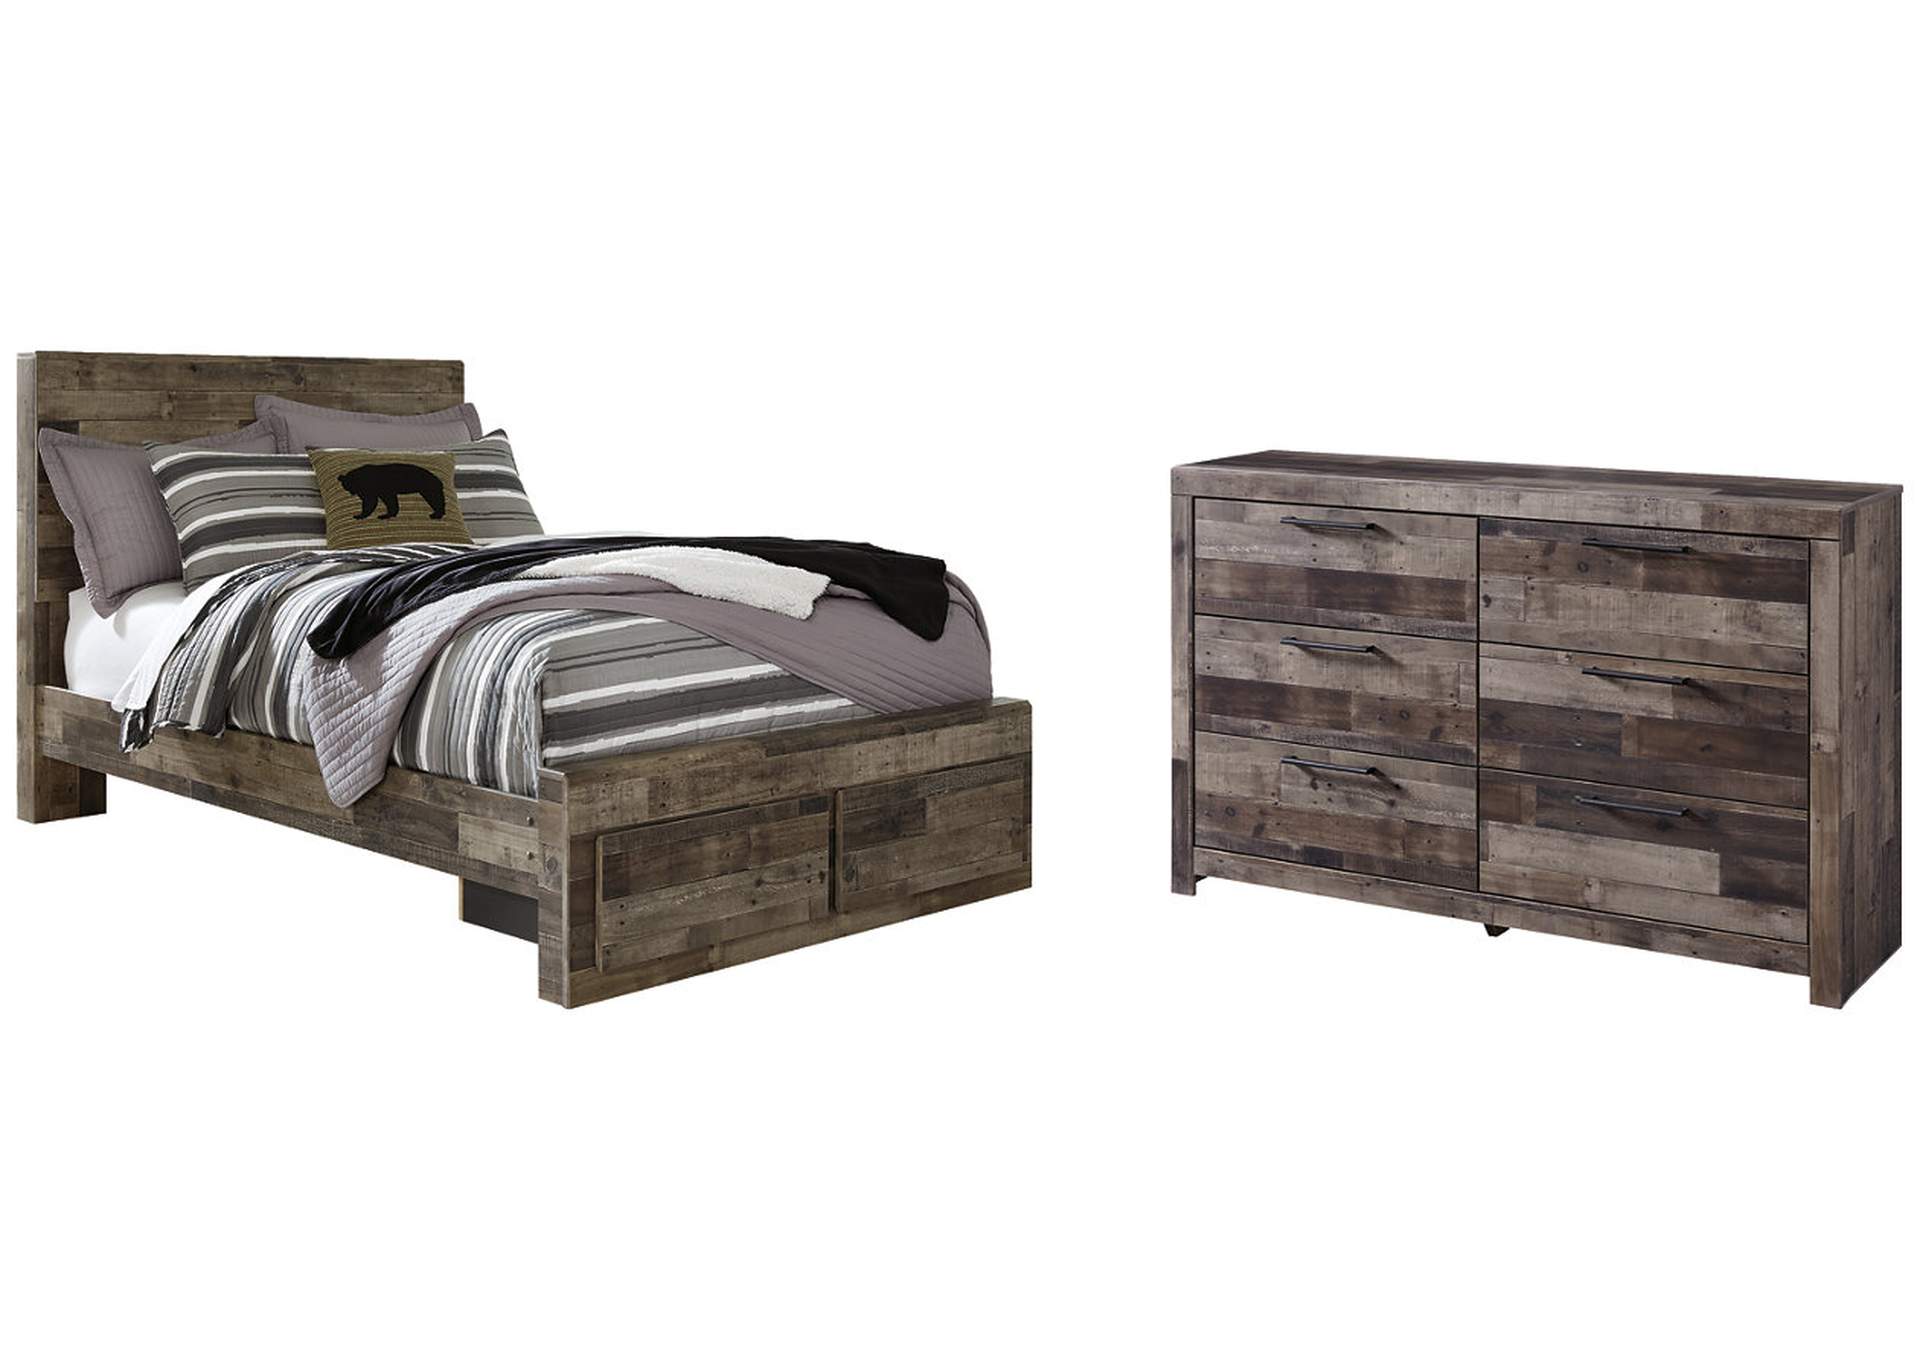 Derekson Full Panel Bed with 2 Storage Drawers with Dresser,Benchcraft